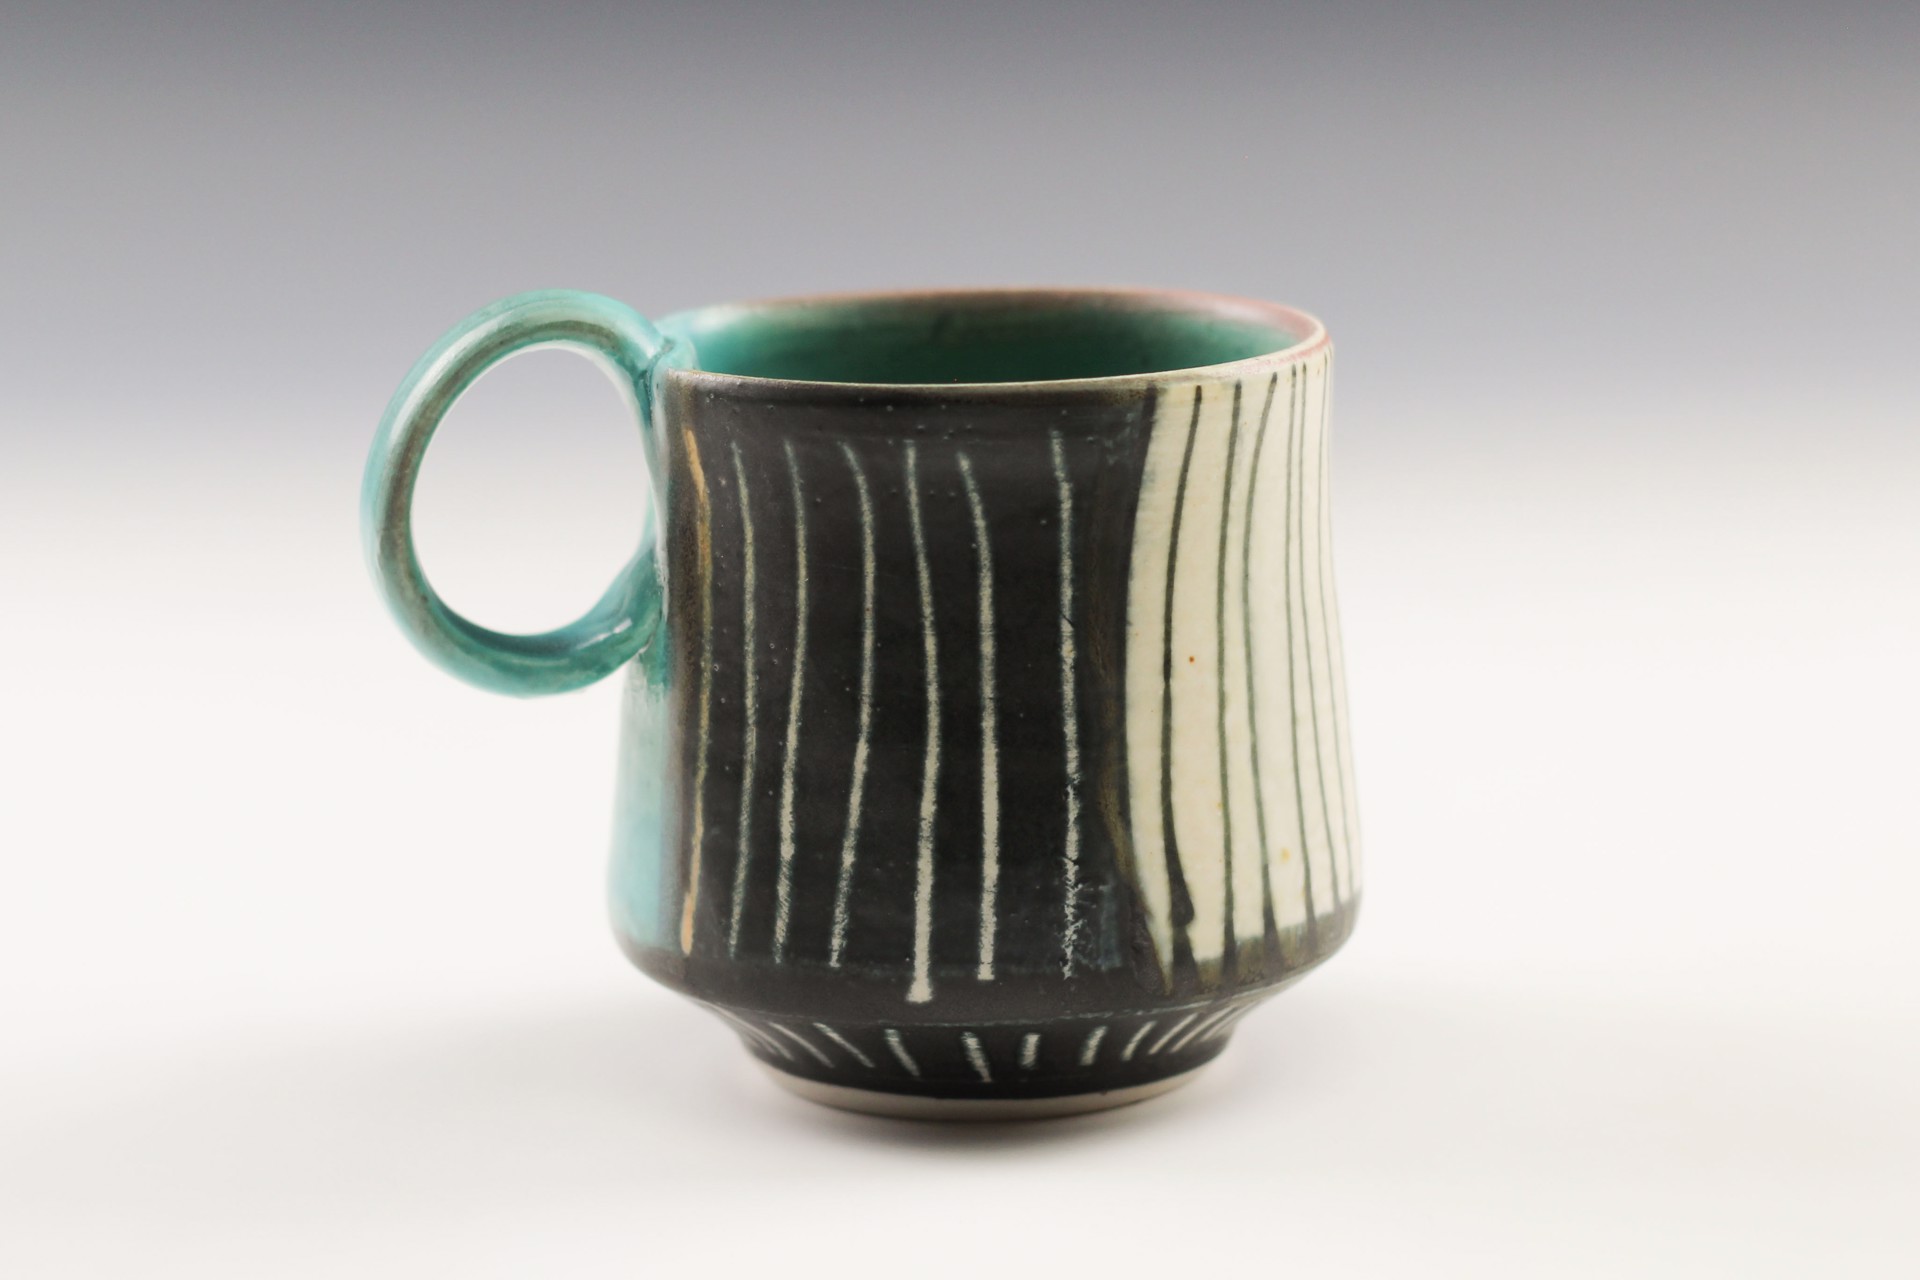 Mug by Delores Fortuna